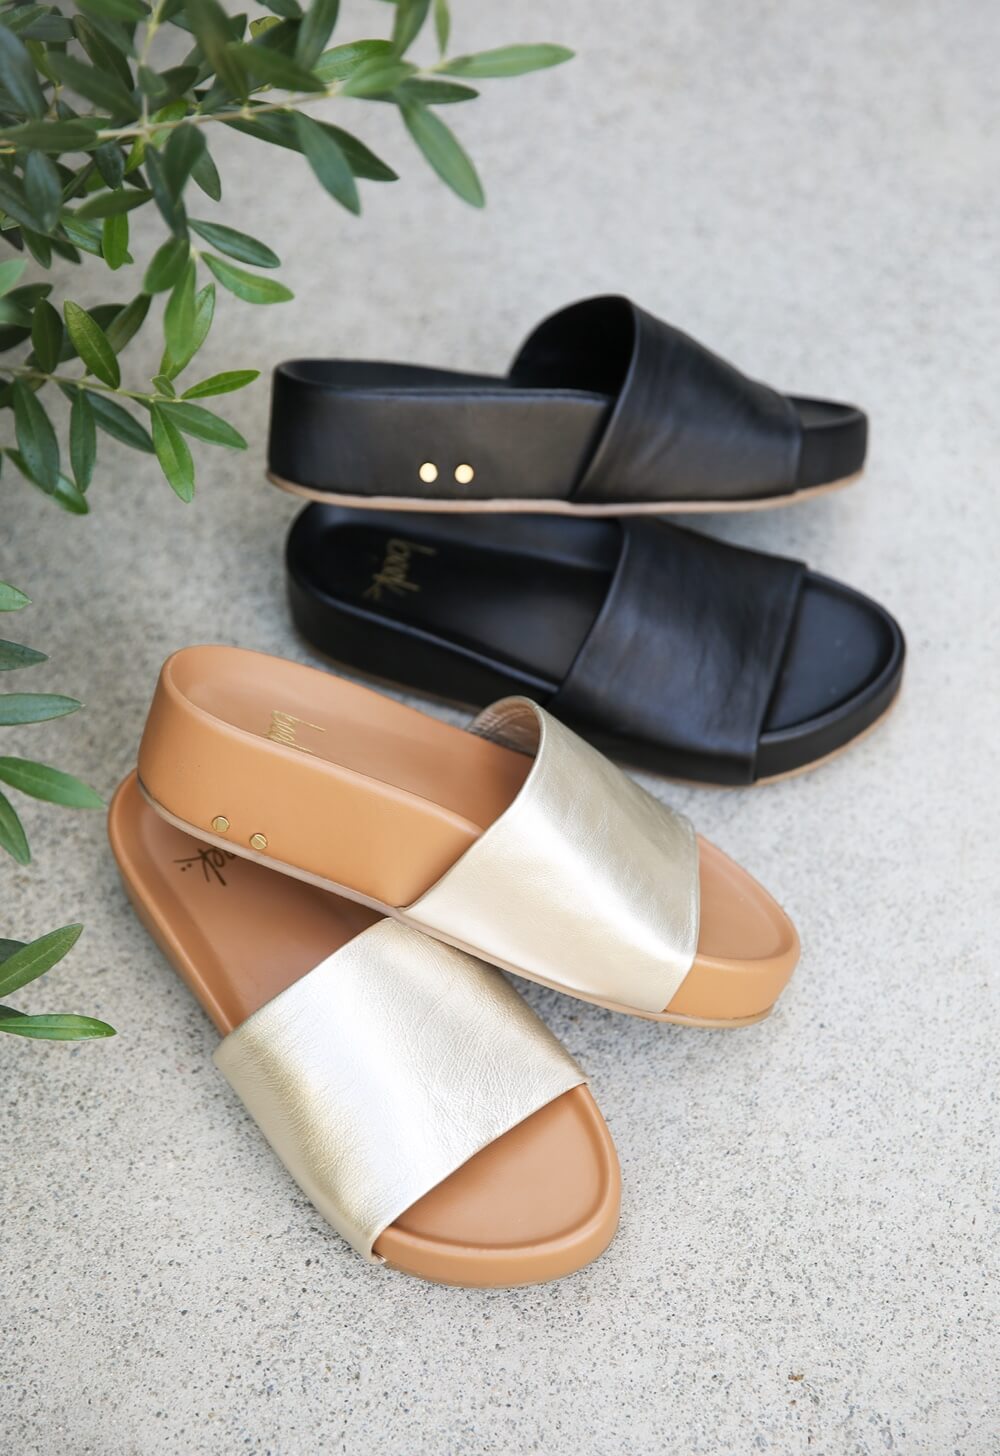 Pelican leather platform sandals in platinum/beach and black.